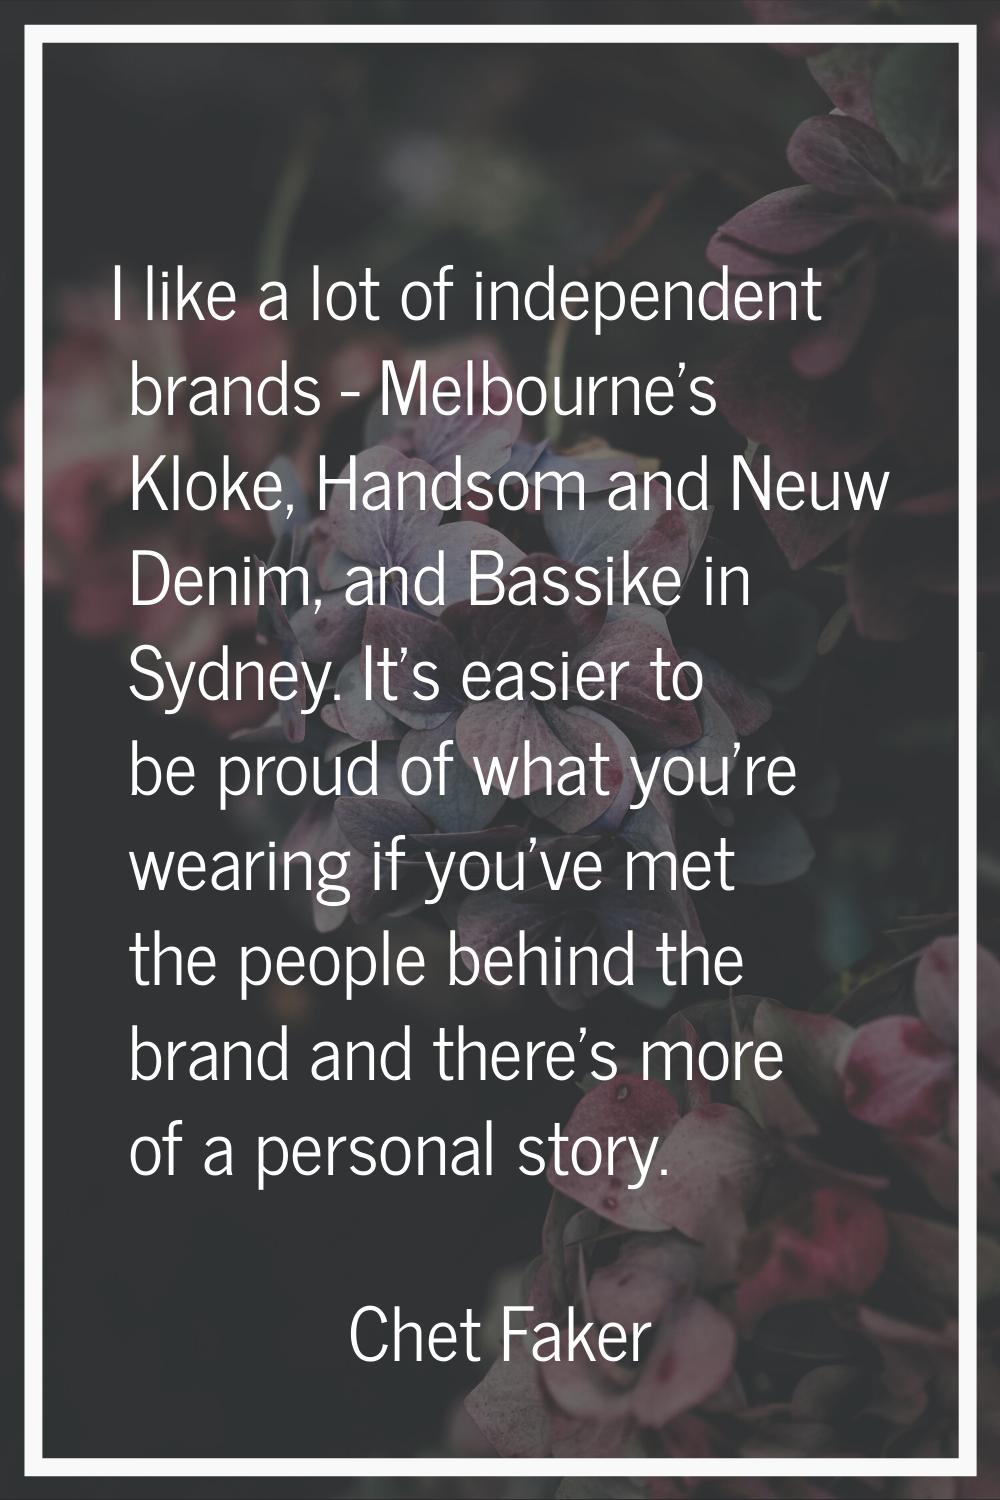 I like a lot of independent brands - Melbourne's Kloke, Handsom and Neuw Denim, and Bassike in Sydn